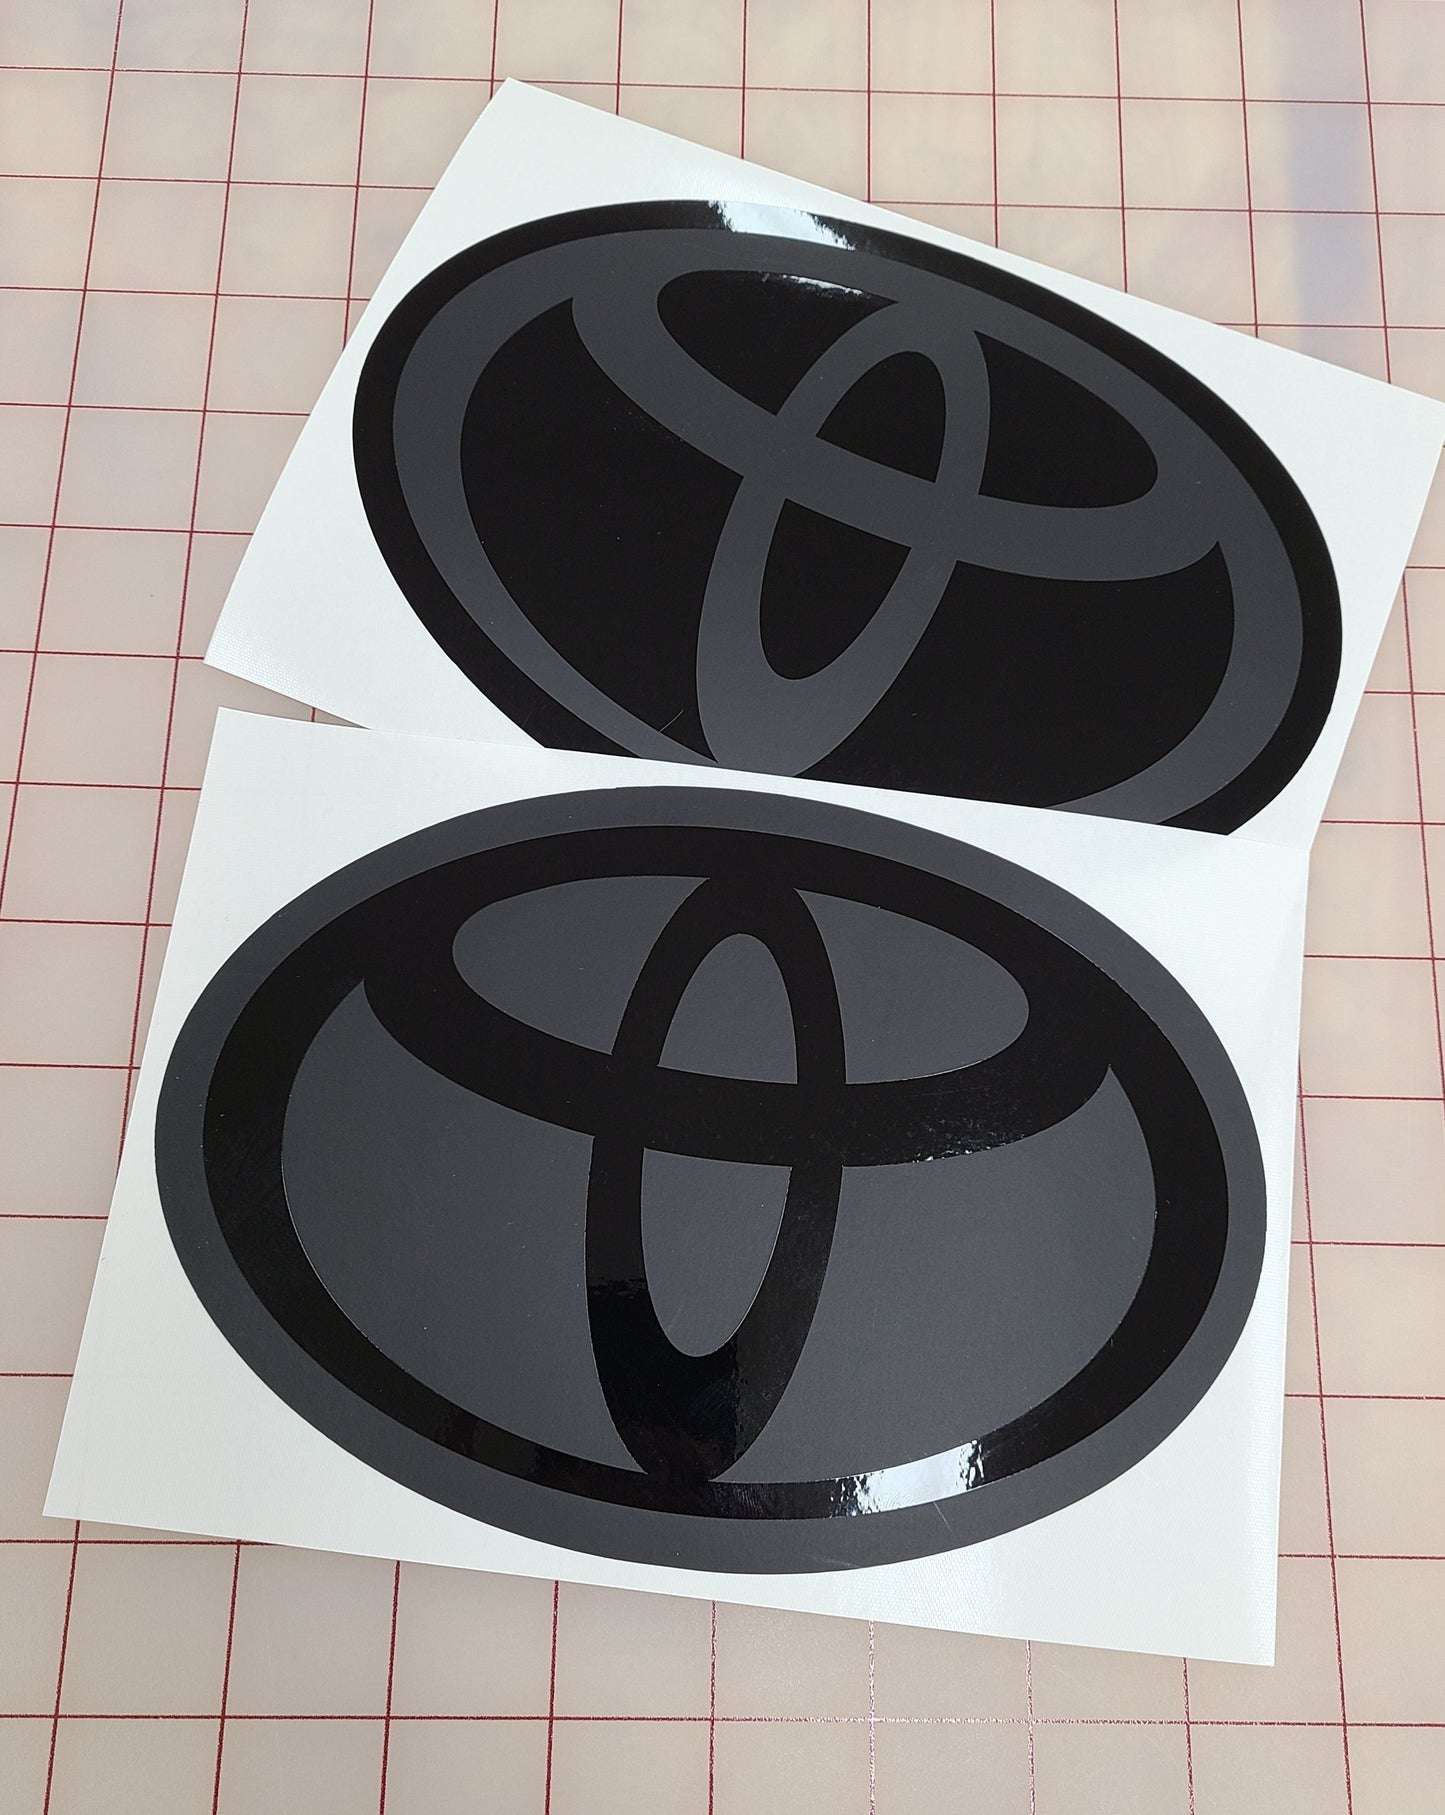 2023-2024 Toyota Prius Stealth Rear Emblem Vinyl Overlay